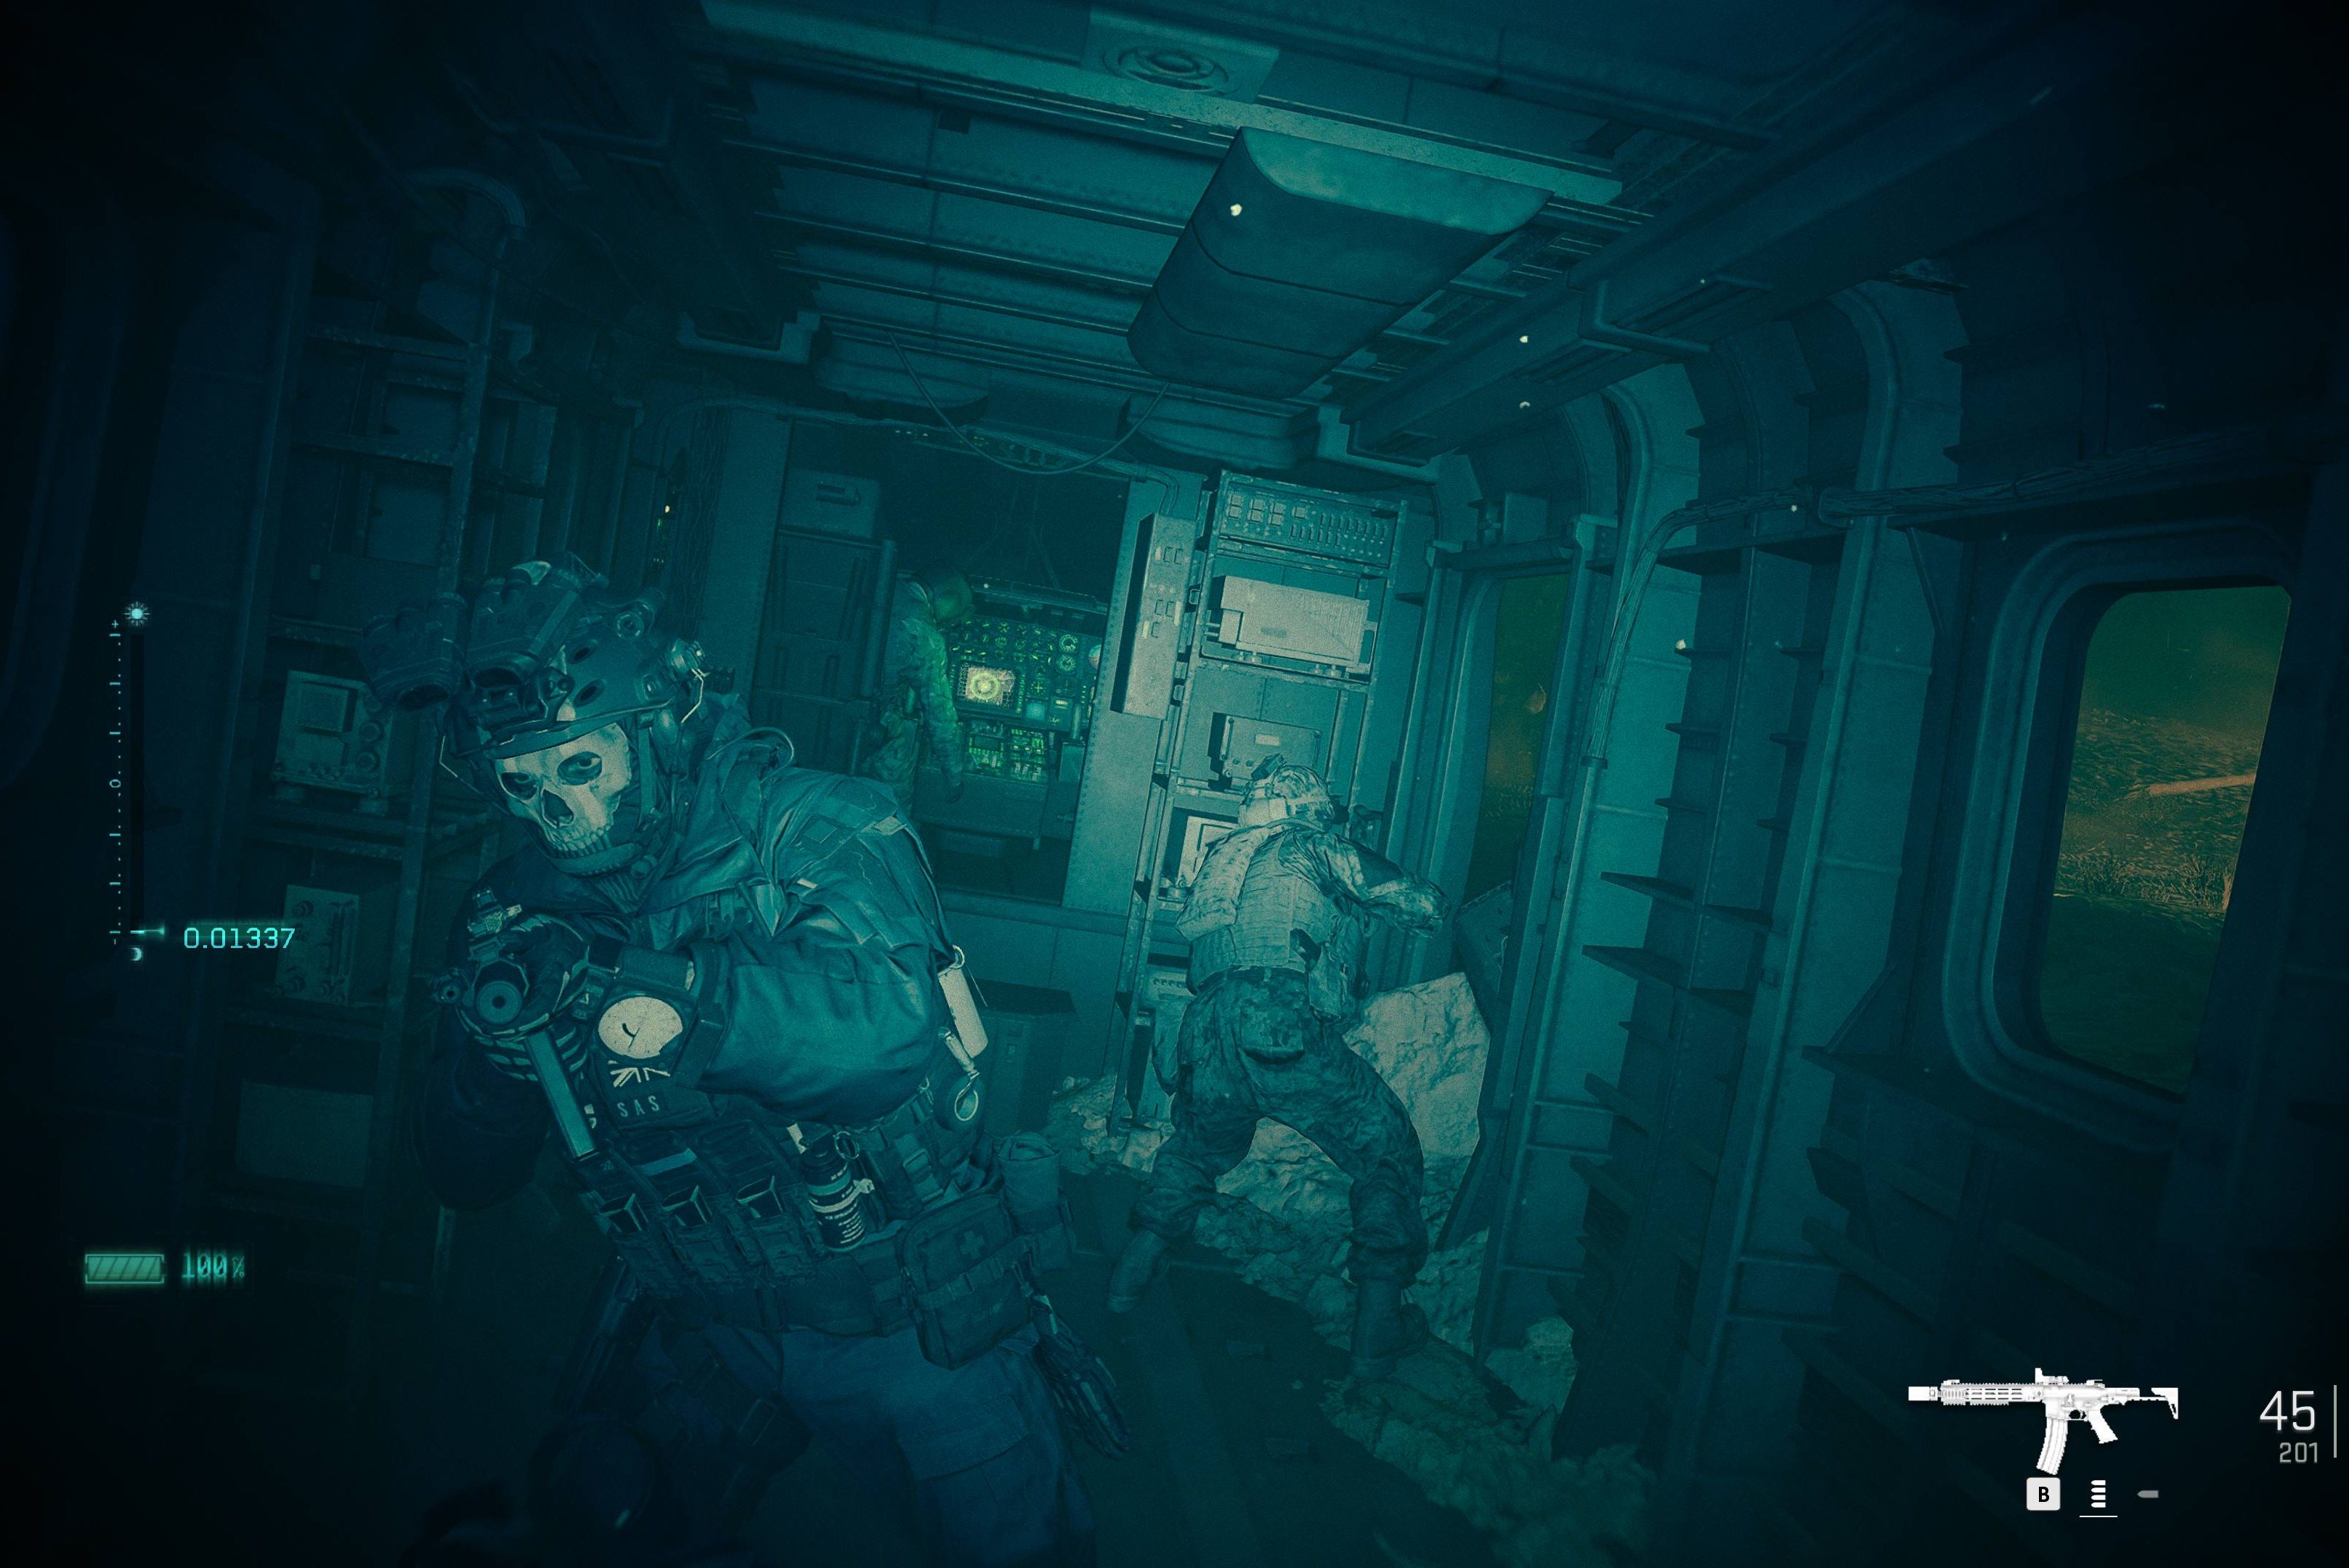 Call Of Duty: Modern Warfare 2 Multiplayer Review - Meet The New